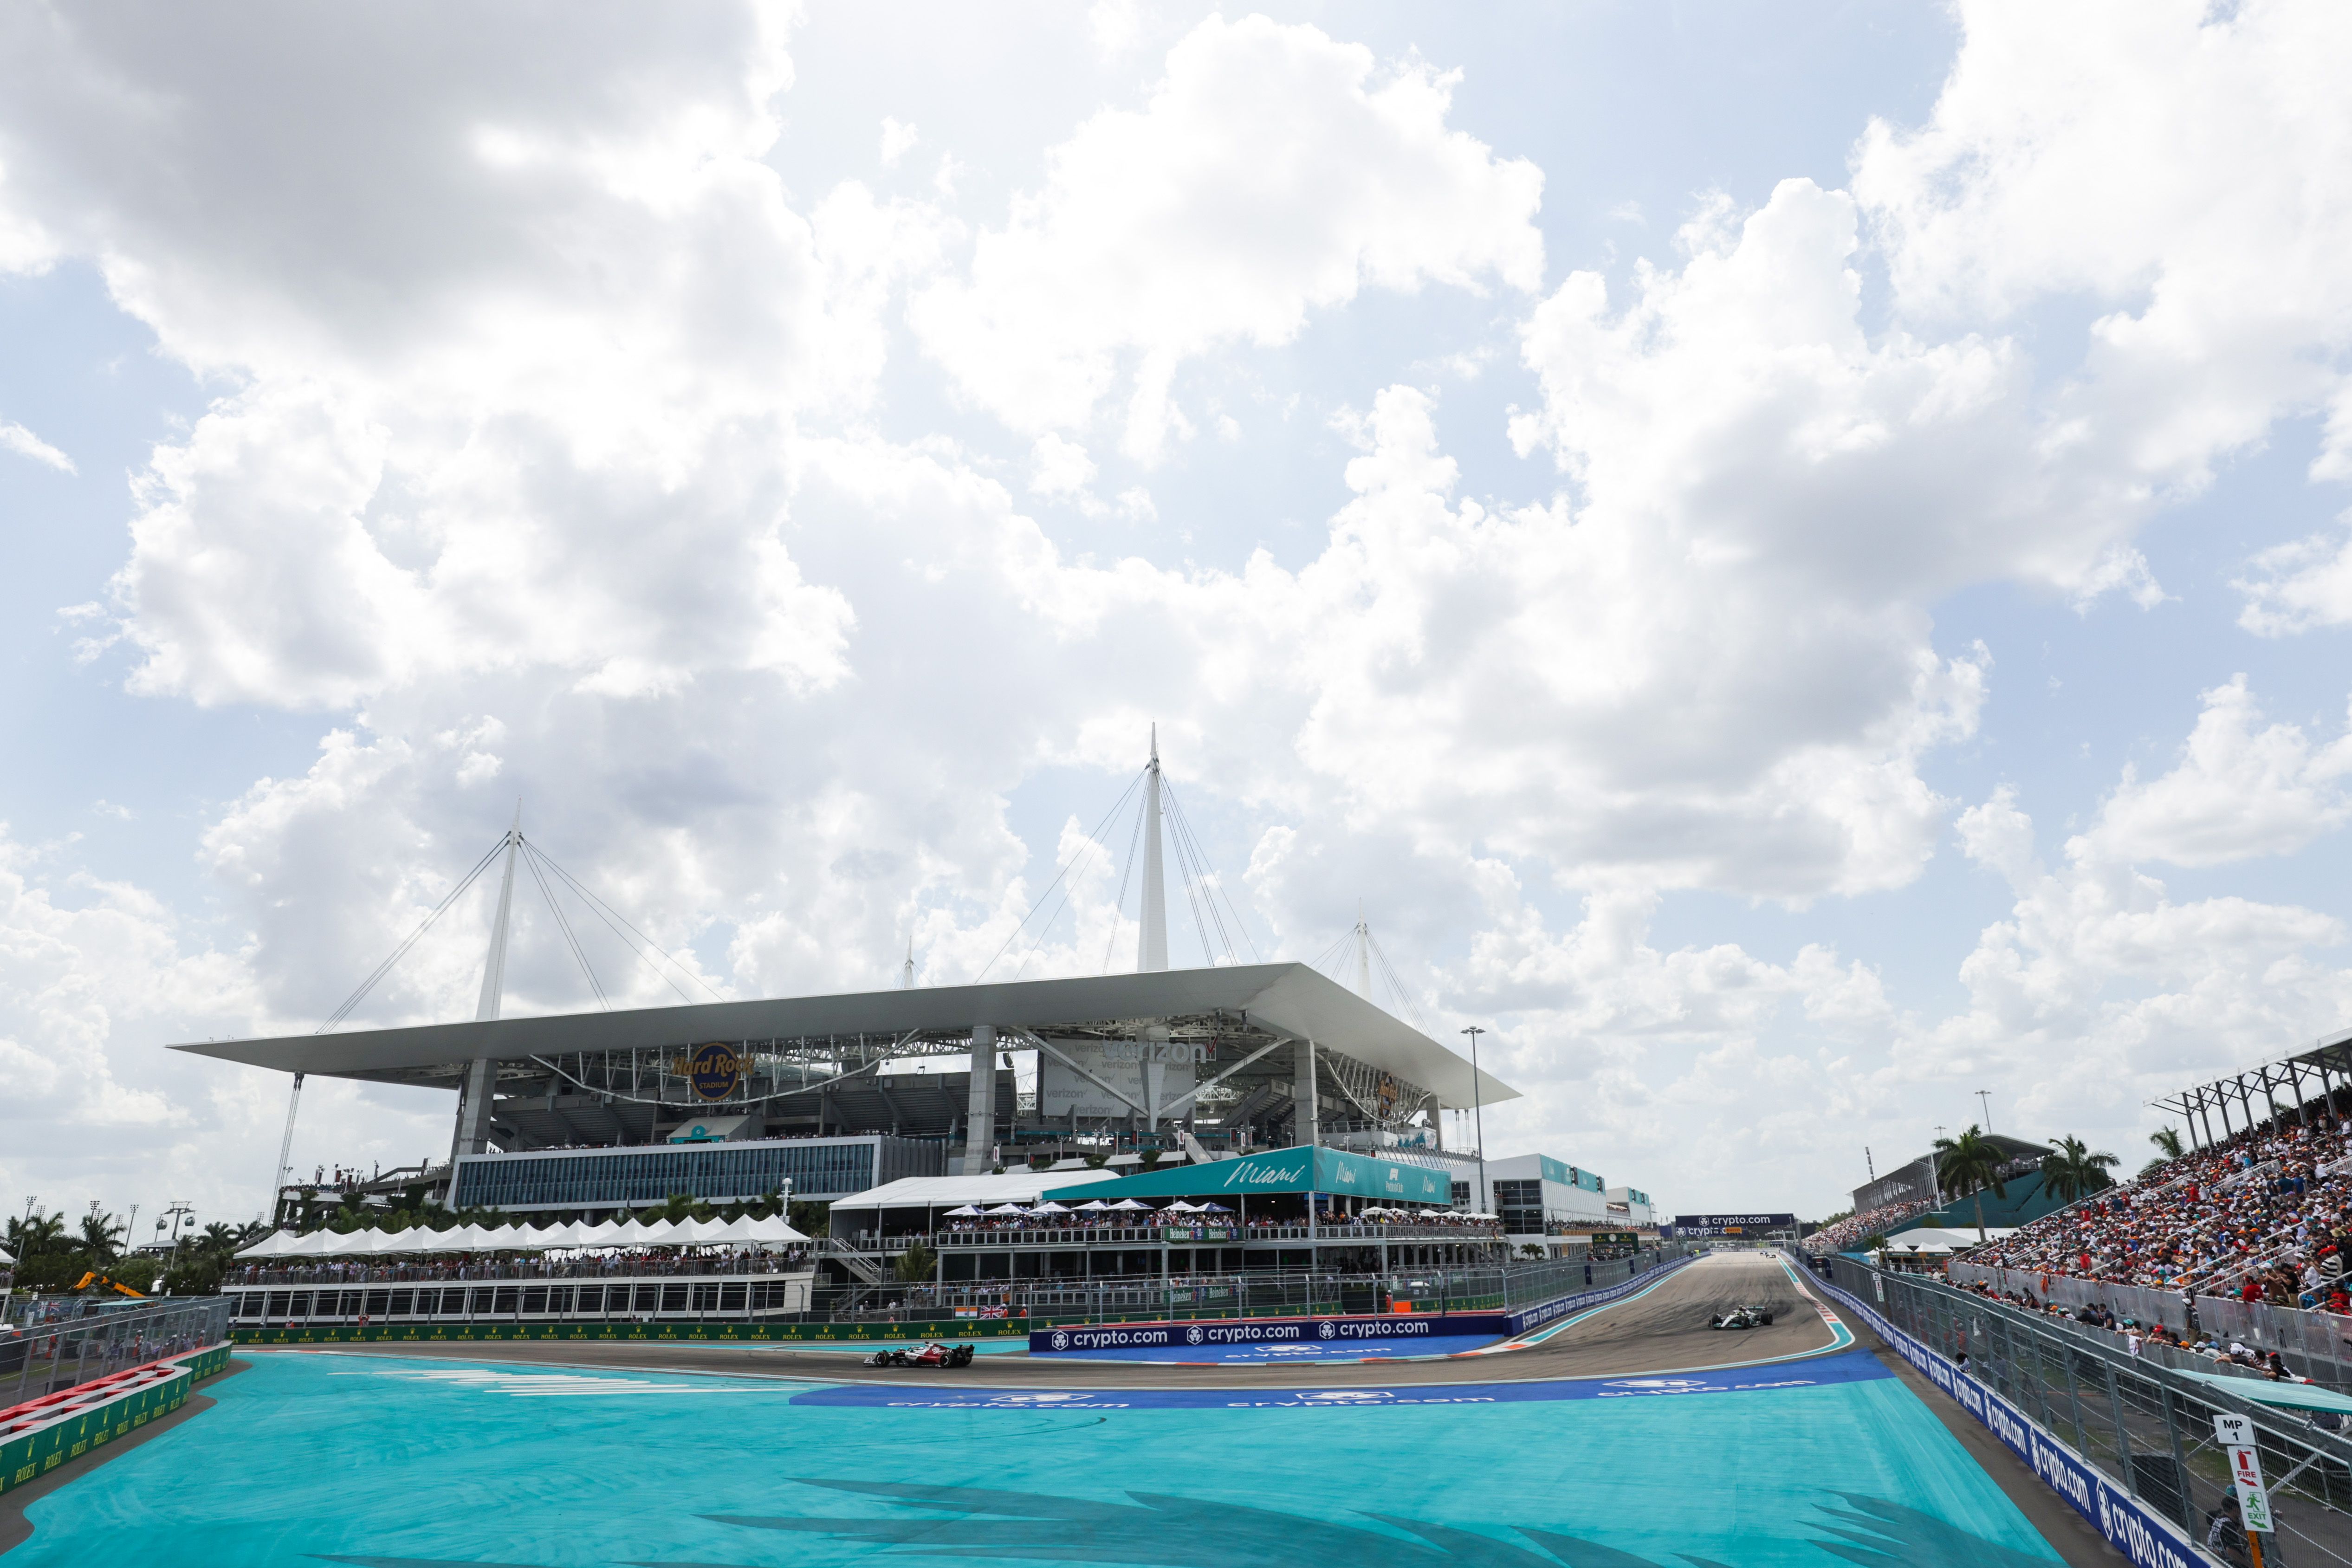 Power Rankings for Miami GP : r/formula1